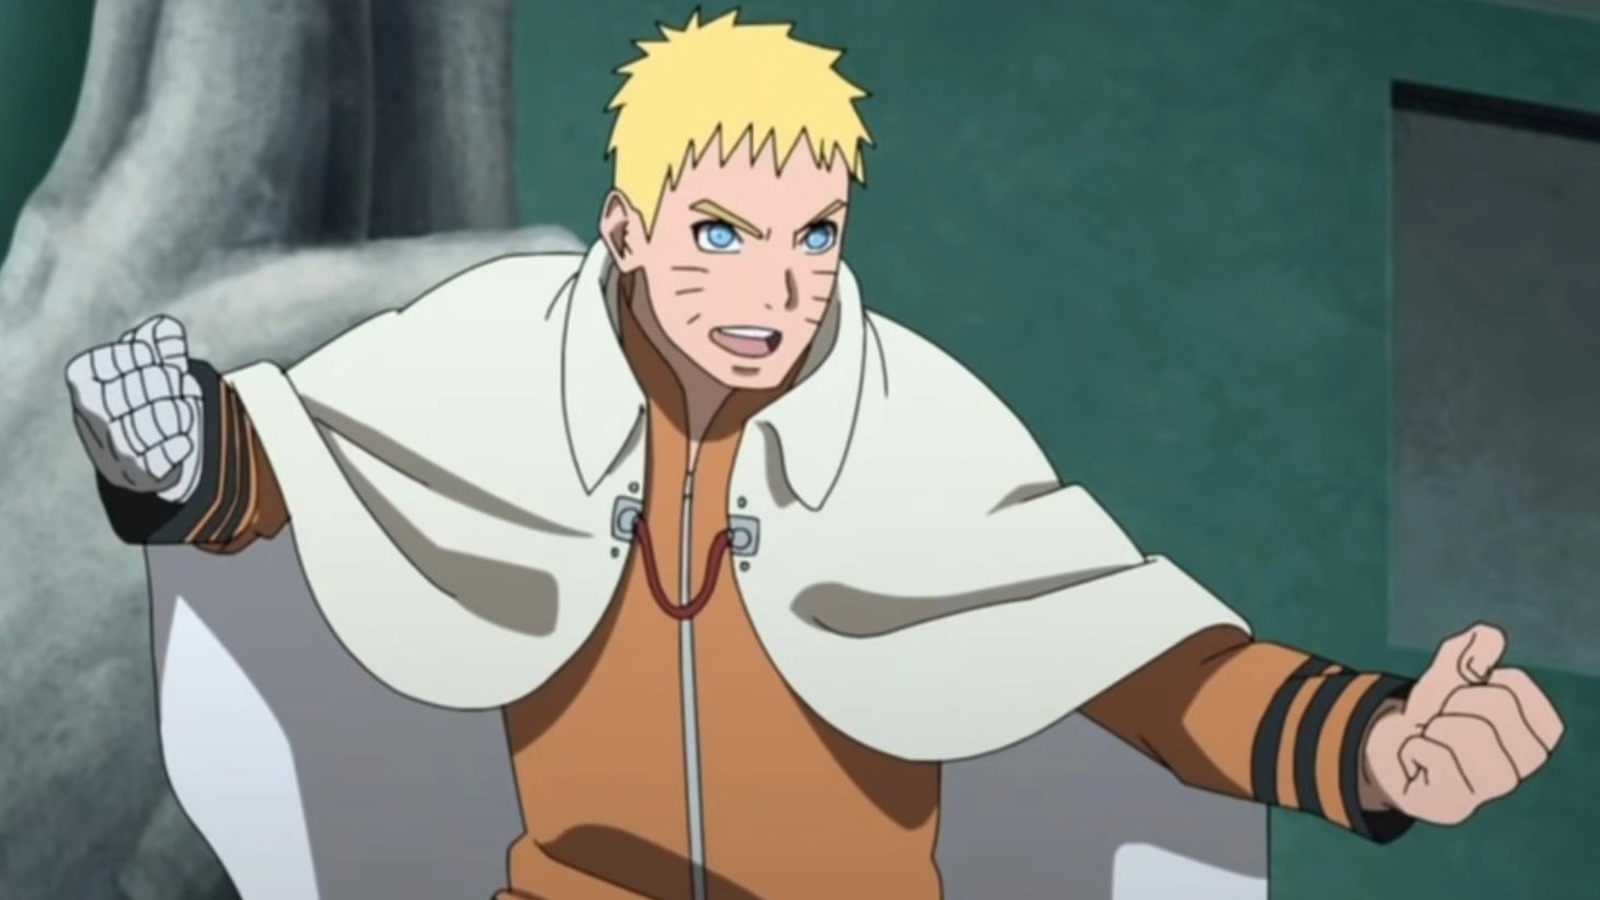 How Does Every Hokage Die in 'Naruto,' 'Naruto Shippuden,' and 'Boruto'?